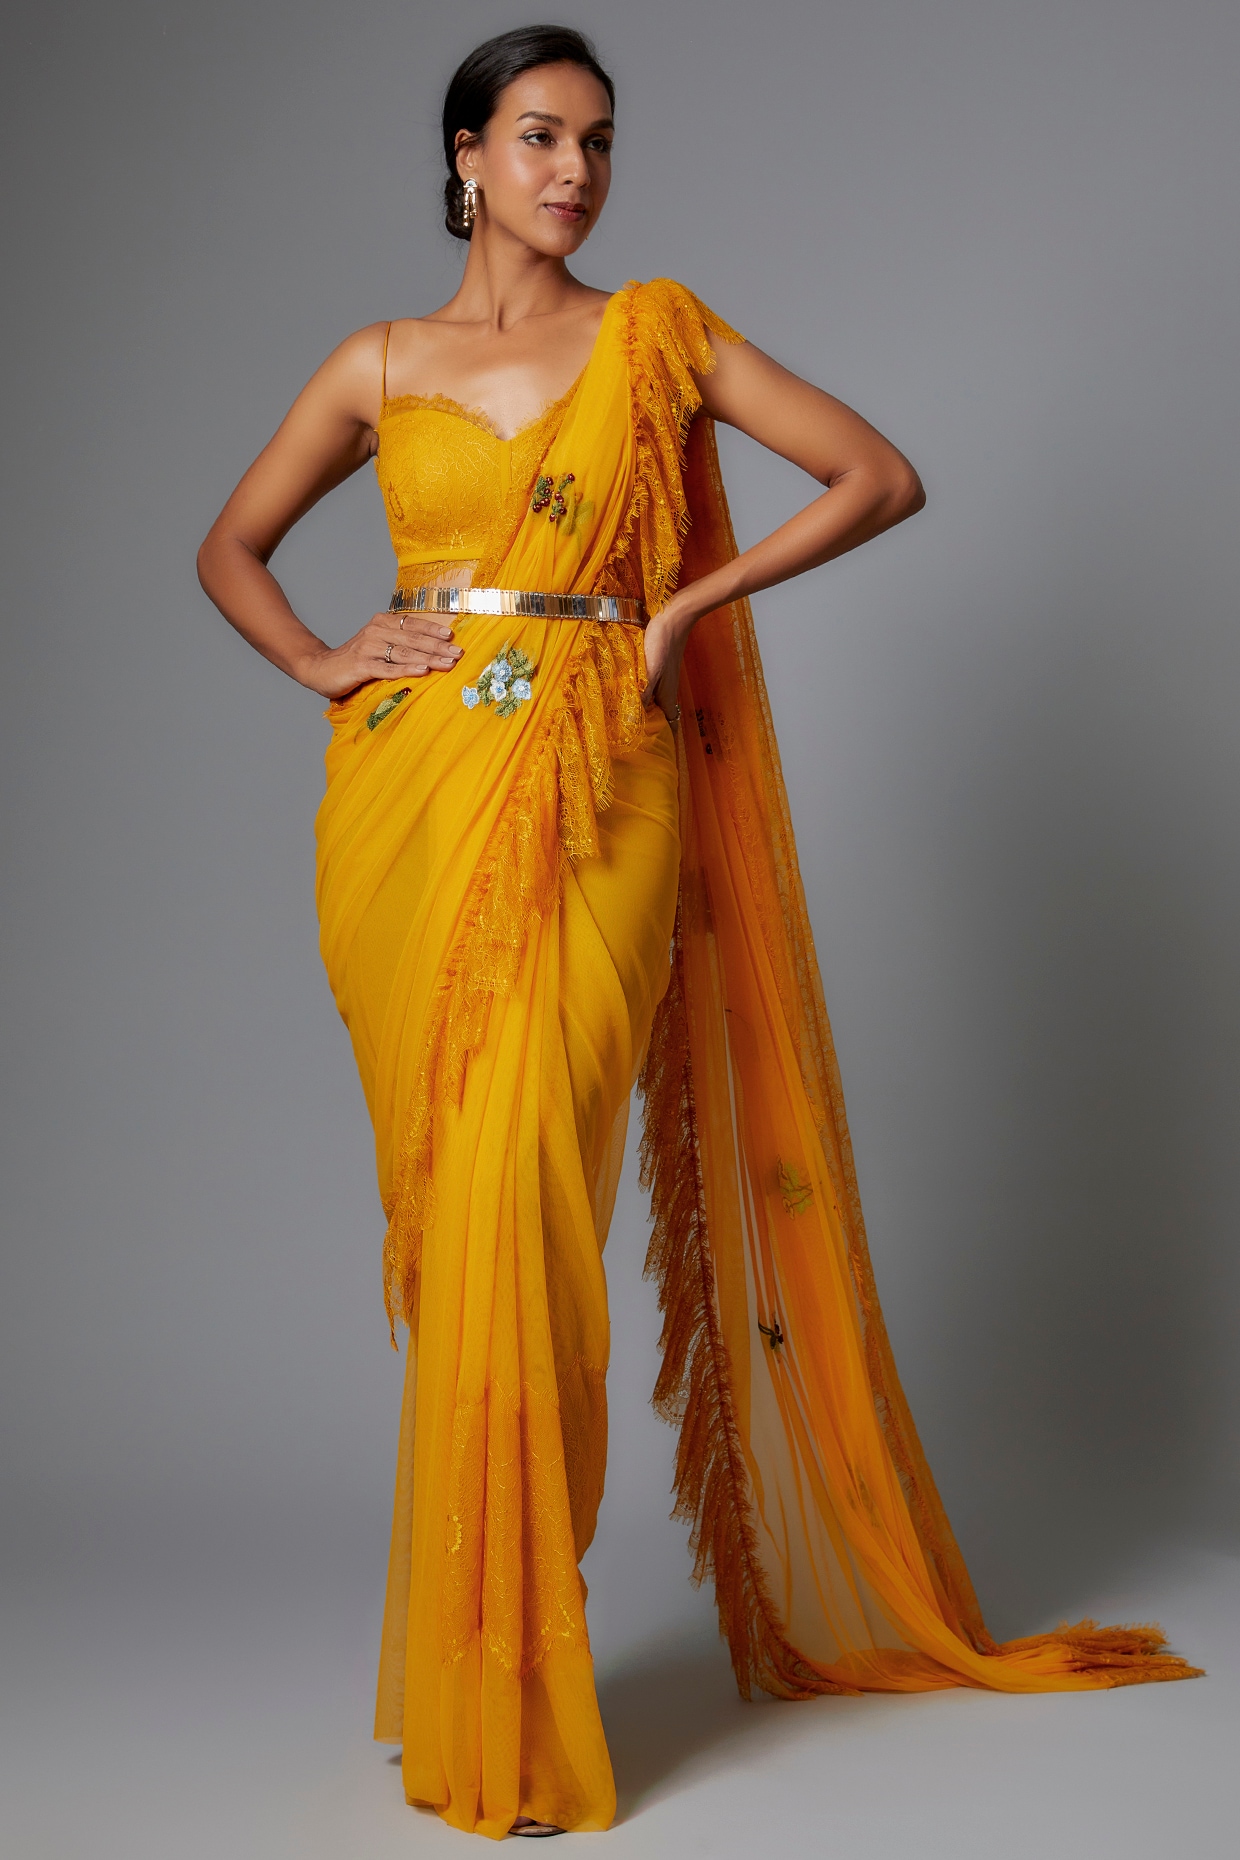 Aishwarya Lekshmi shines in a yellow saree at her new movie's muhurat  ceremony!